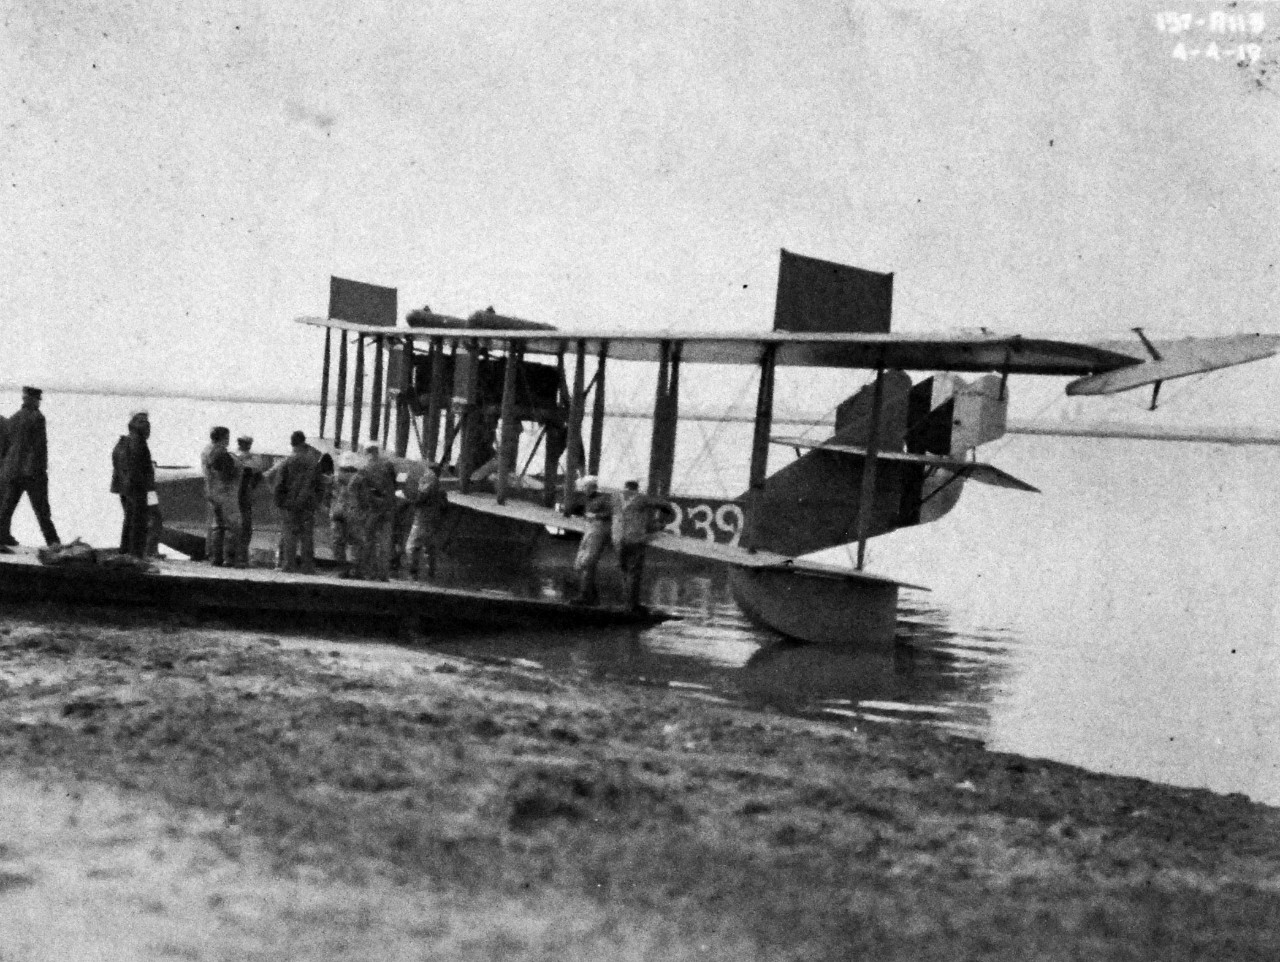 <p>80-G-1021:&nbsp;&nbsp;&nbsp;&nbsp; H-16 on the shore with sailors attending to the aircraft, April 4, 1919.&nbsp;</p>
